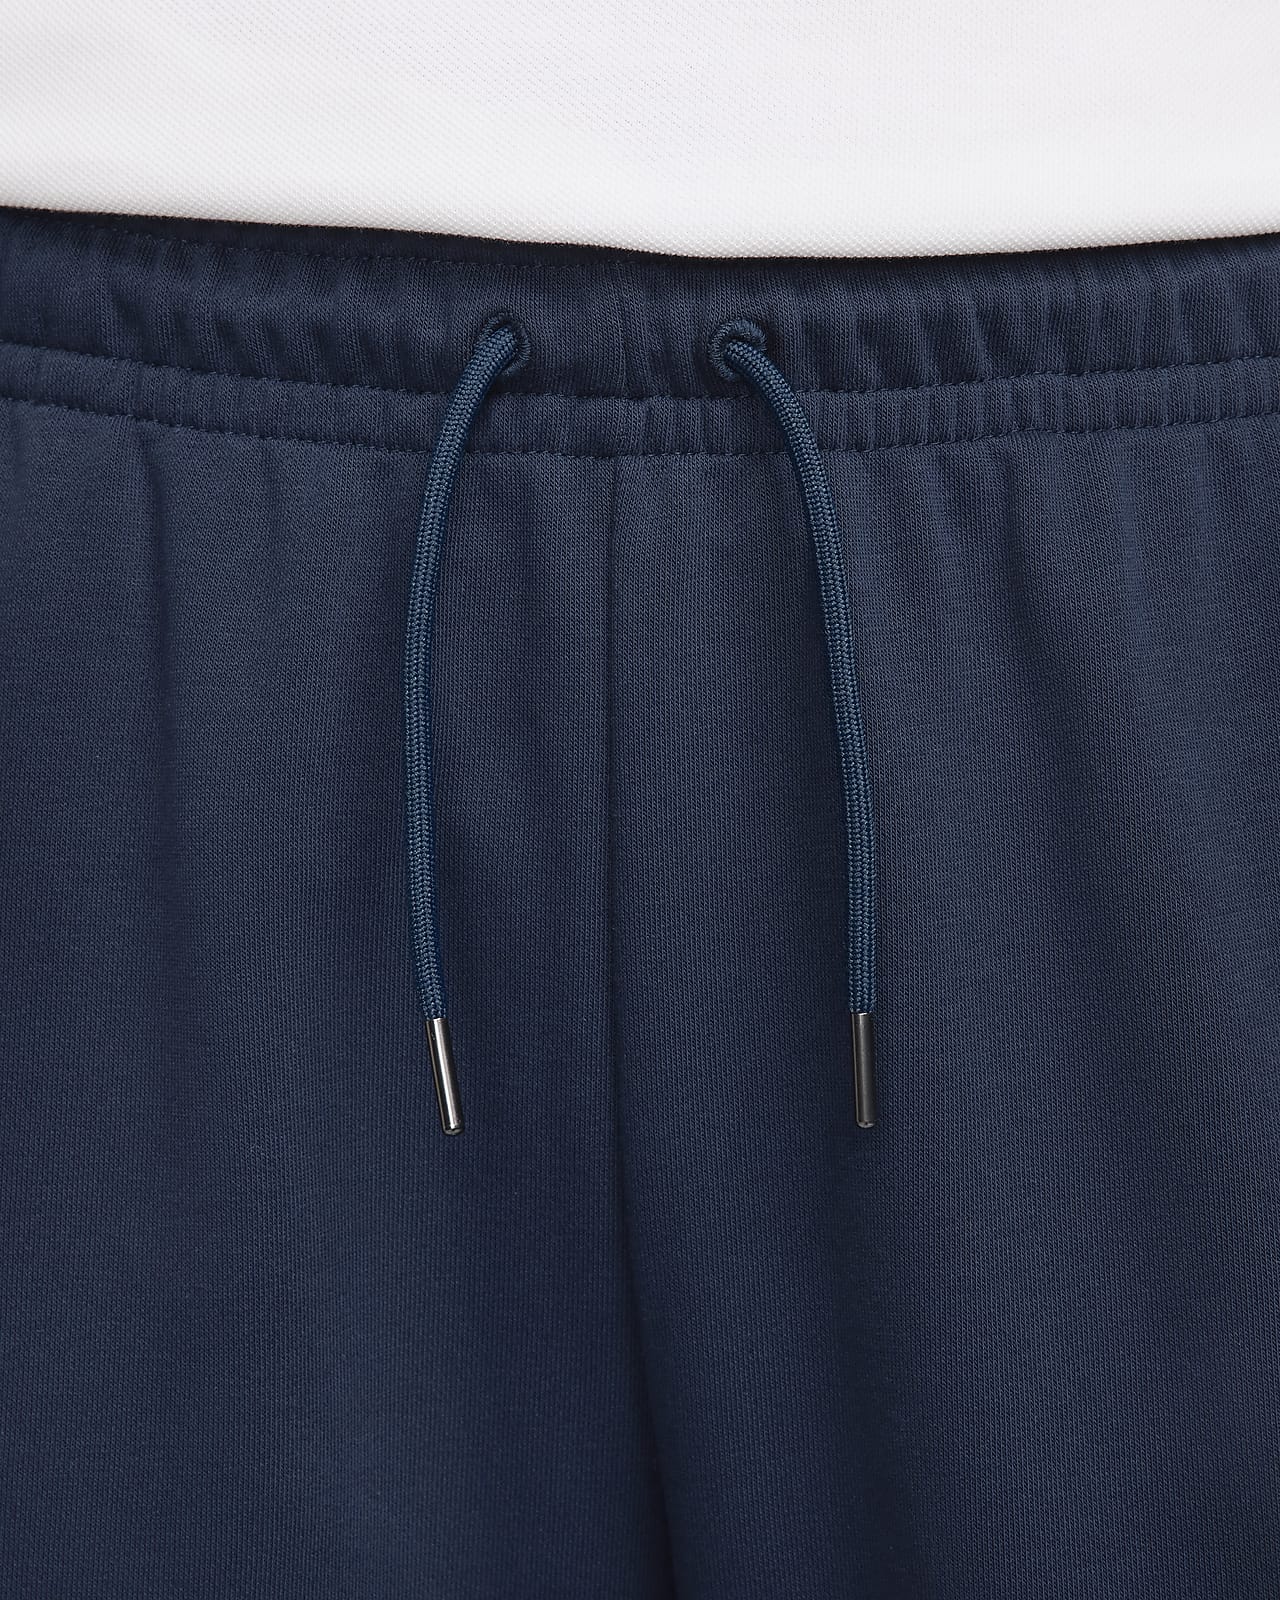 AUWB-MADDOX-HT20 Woman: Track pants with denim print | Diesel | Pantalon  femme, Pantalon de survêtement, Pantalon